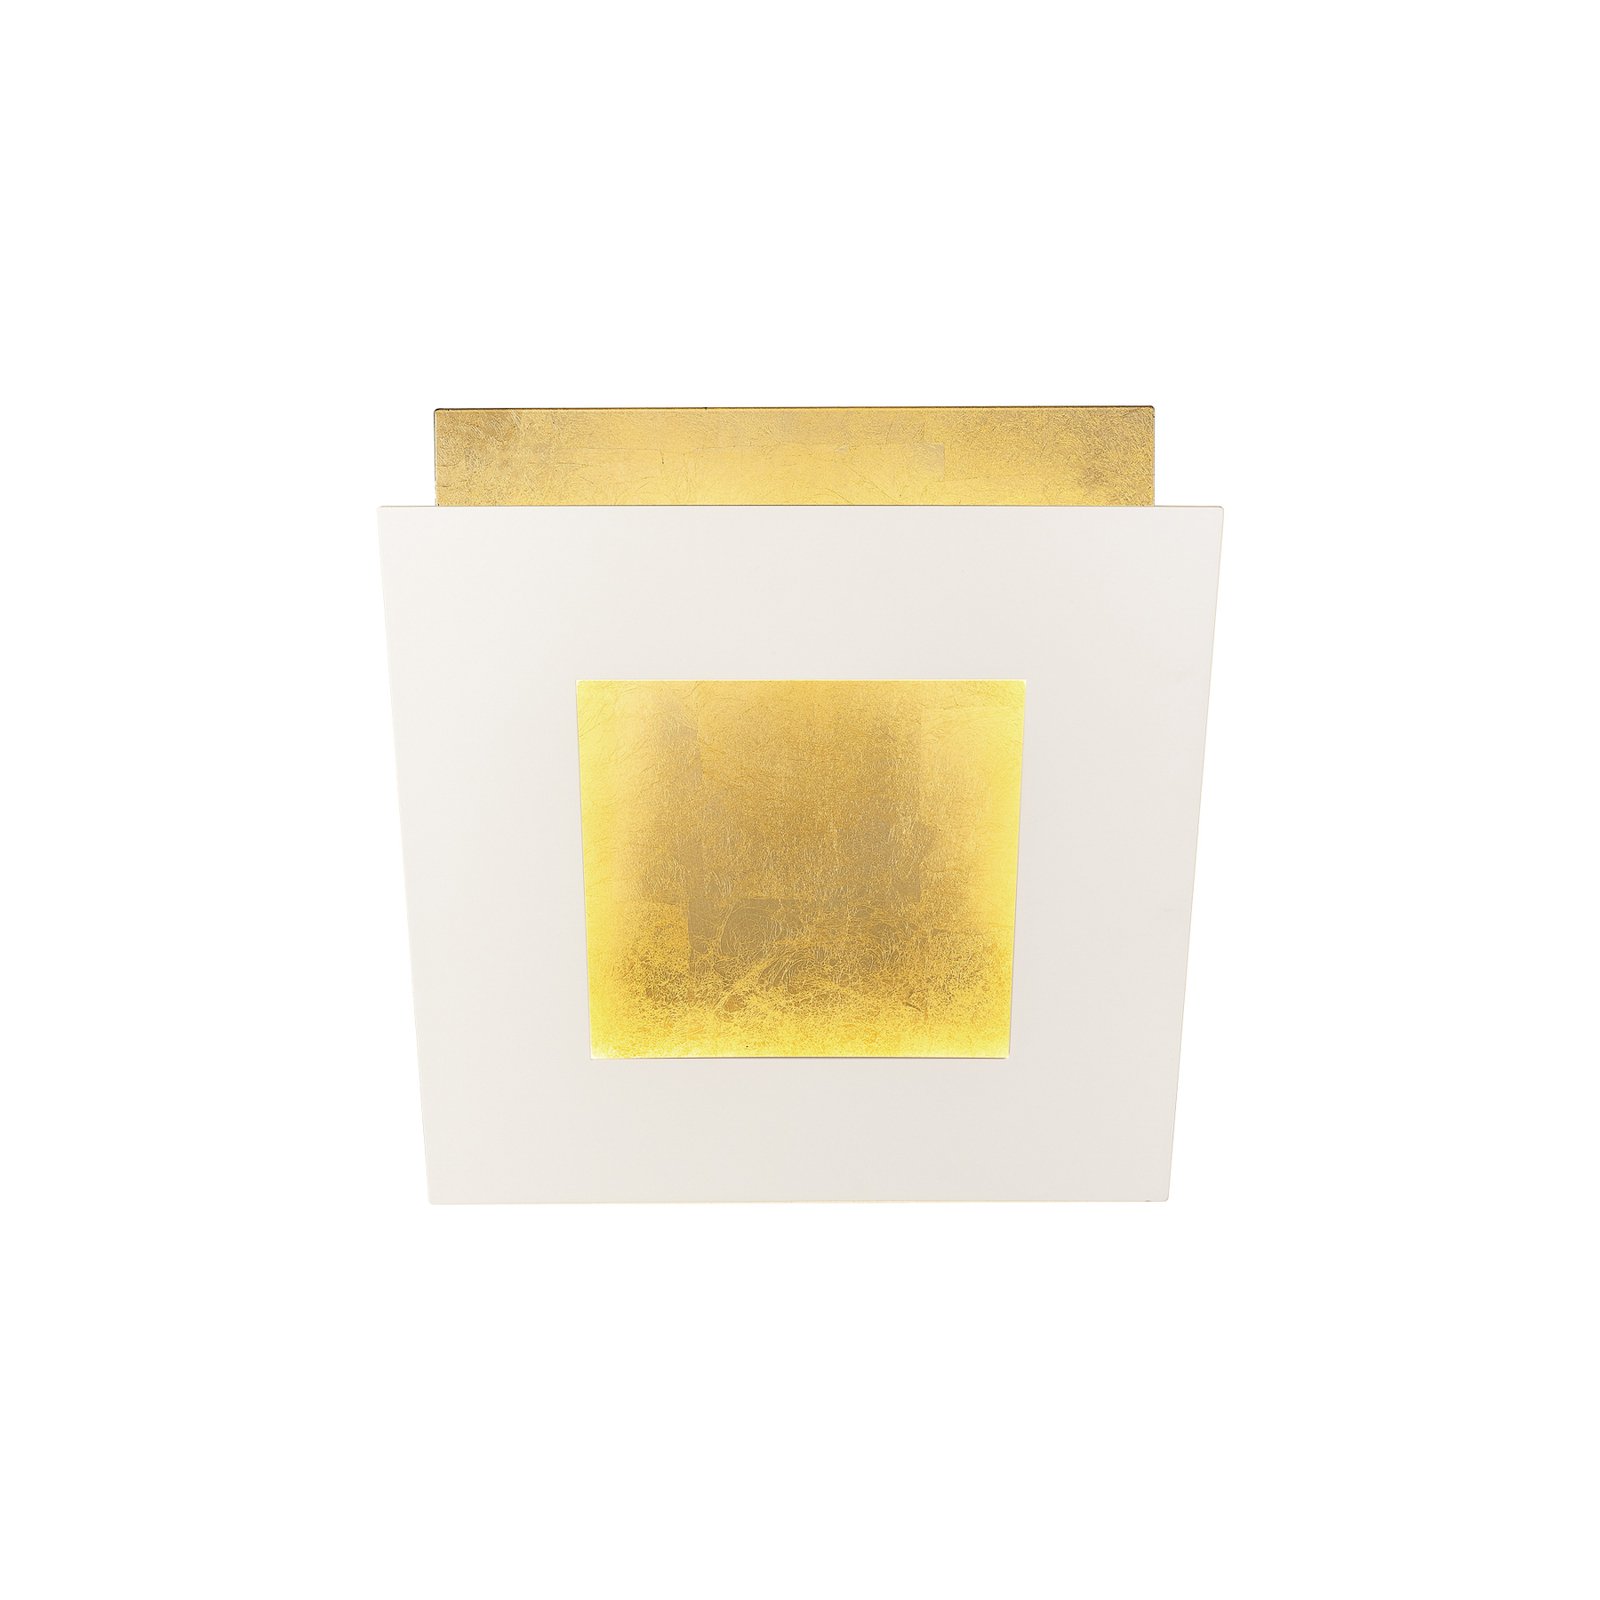 LED-Wandleuchte Dalia, weiß/gold, 18 x 18 cm, Aluminium